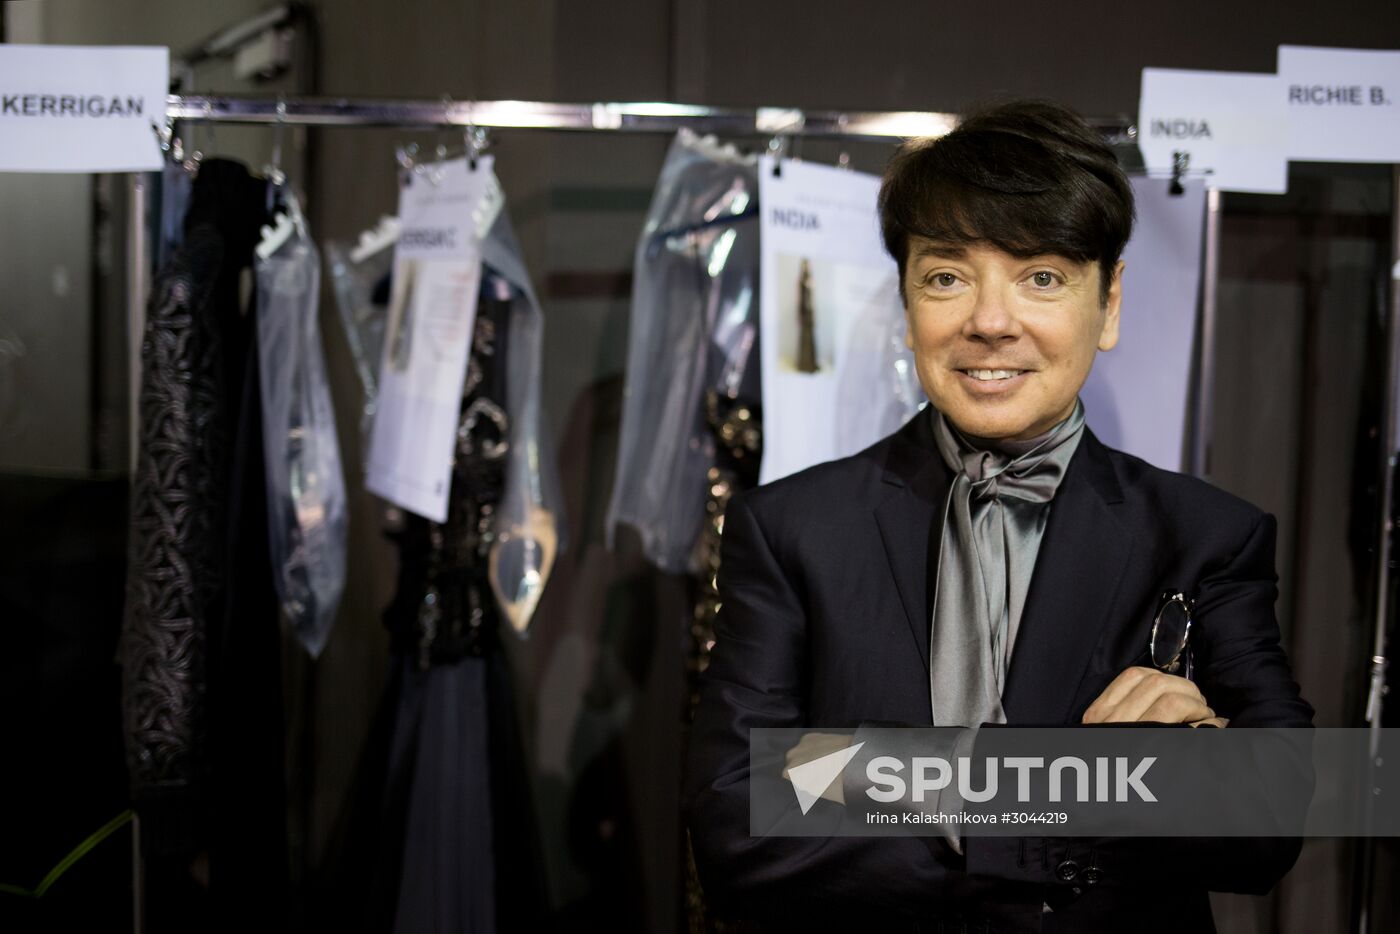 Valentin Yudashkin fashion house unveils new collection at Fashion Week in Paris